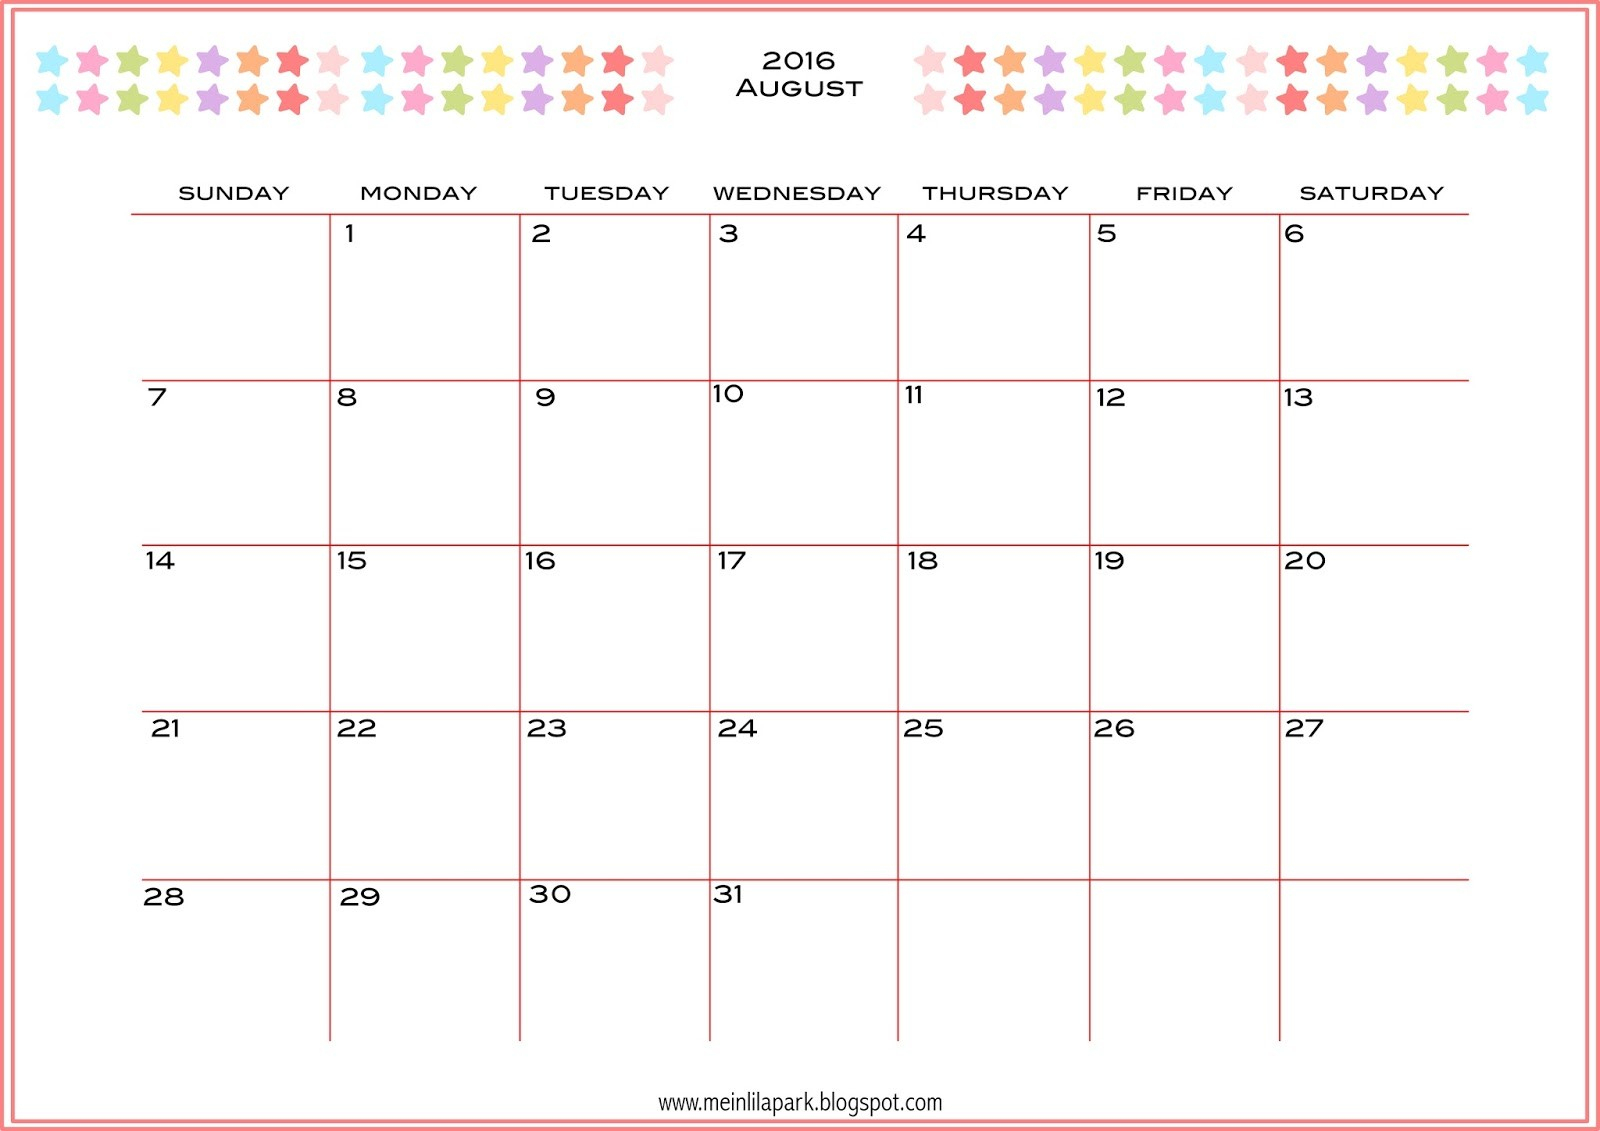 Free Printable Monthly Planner Calendar Free Printable 2016 Monthly - Free Printable Monthly Planner 2016